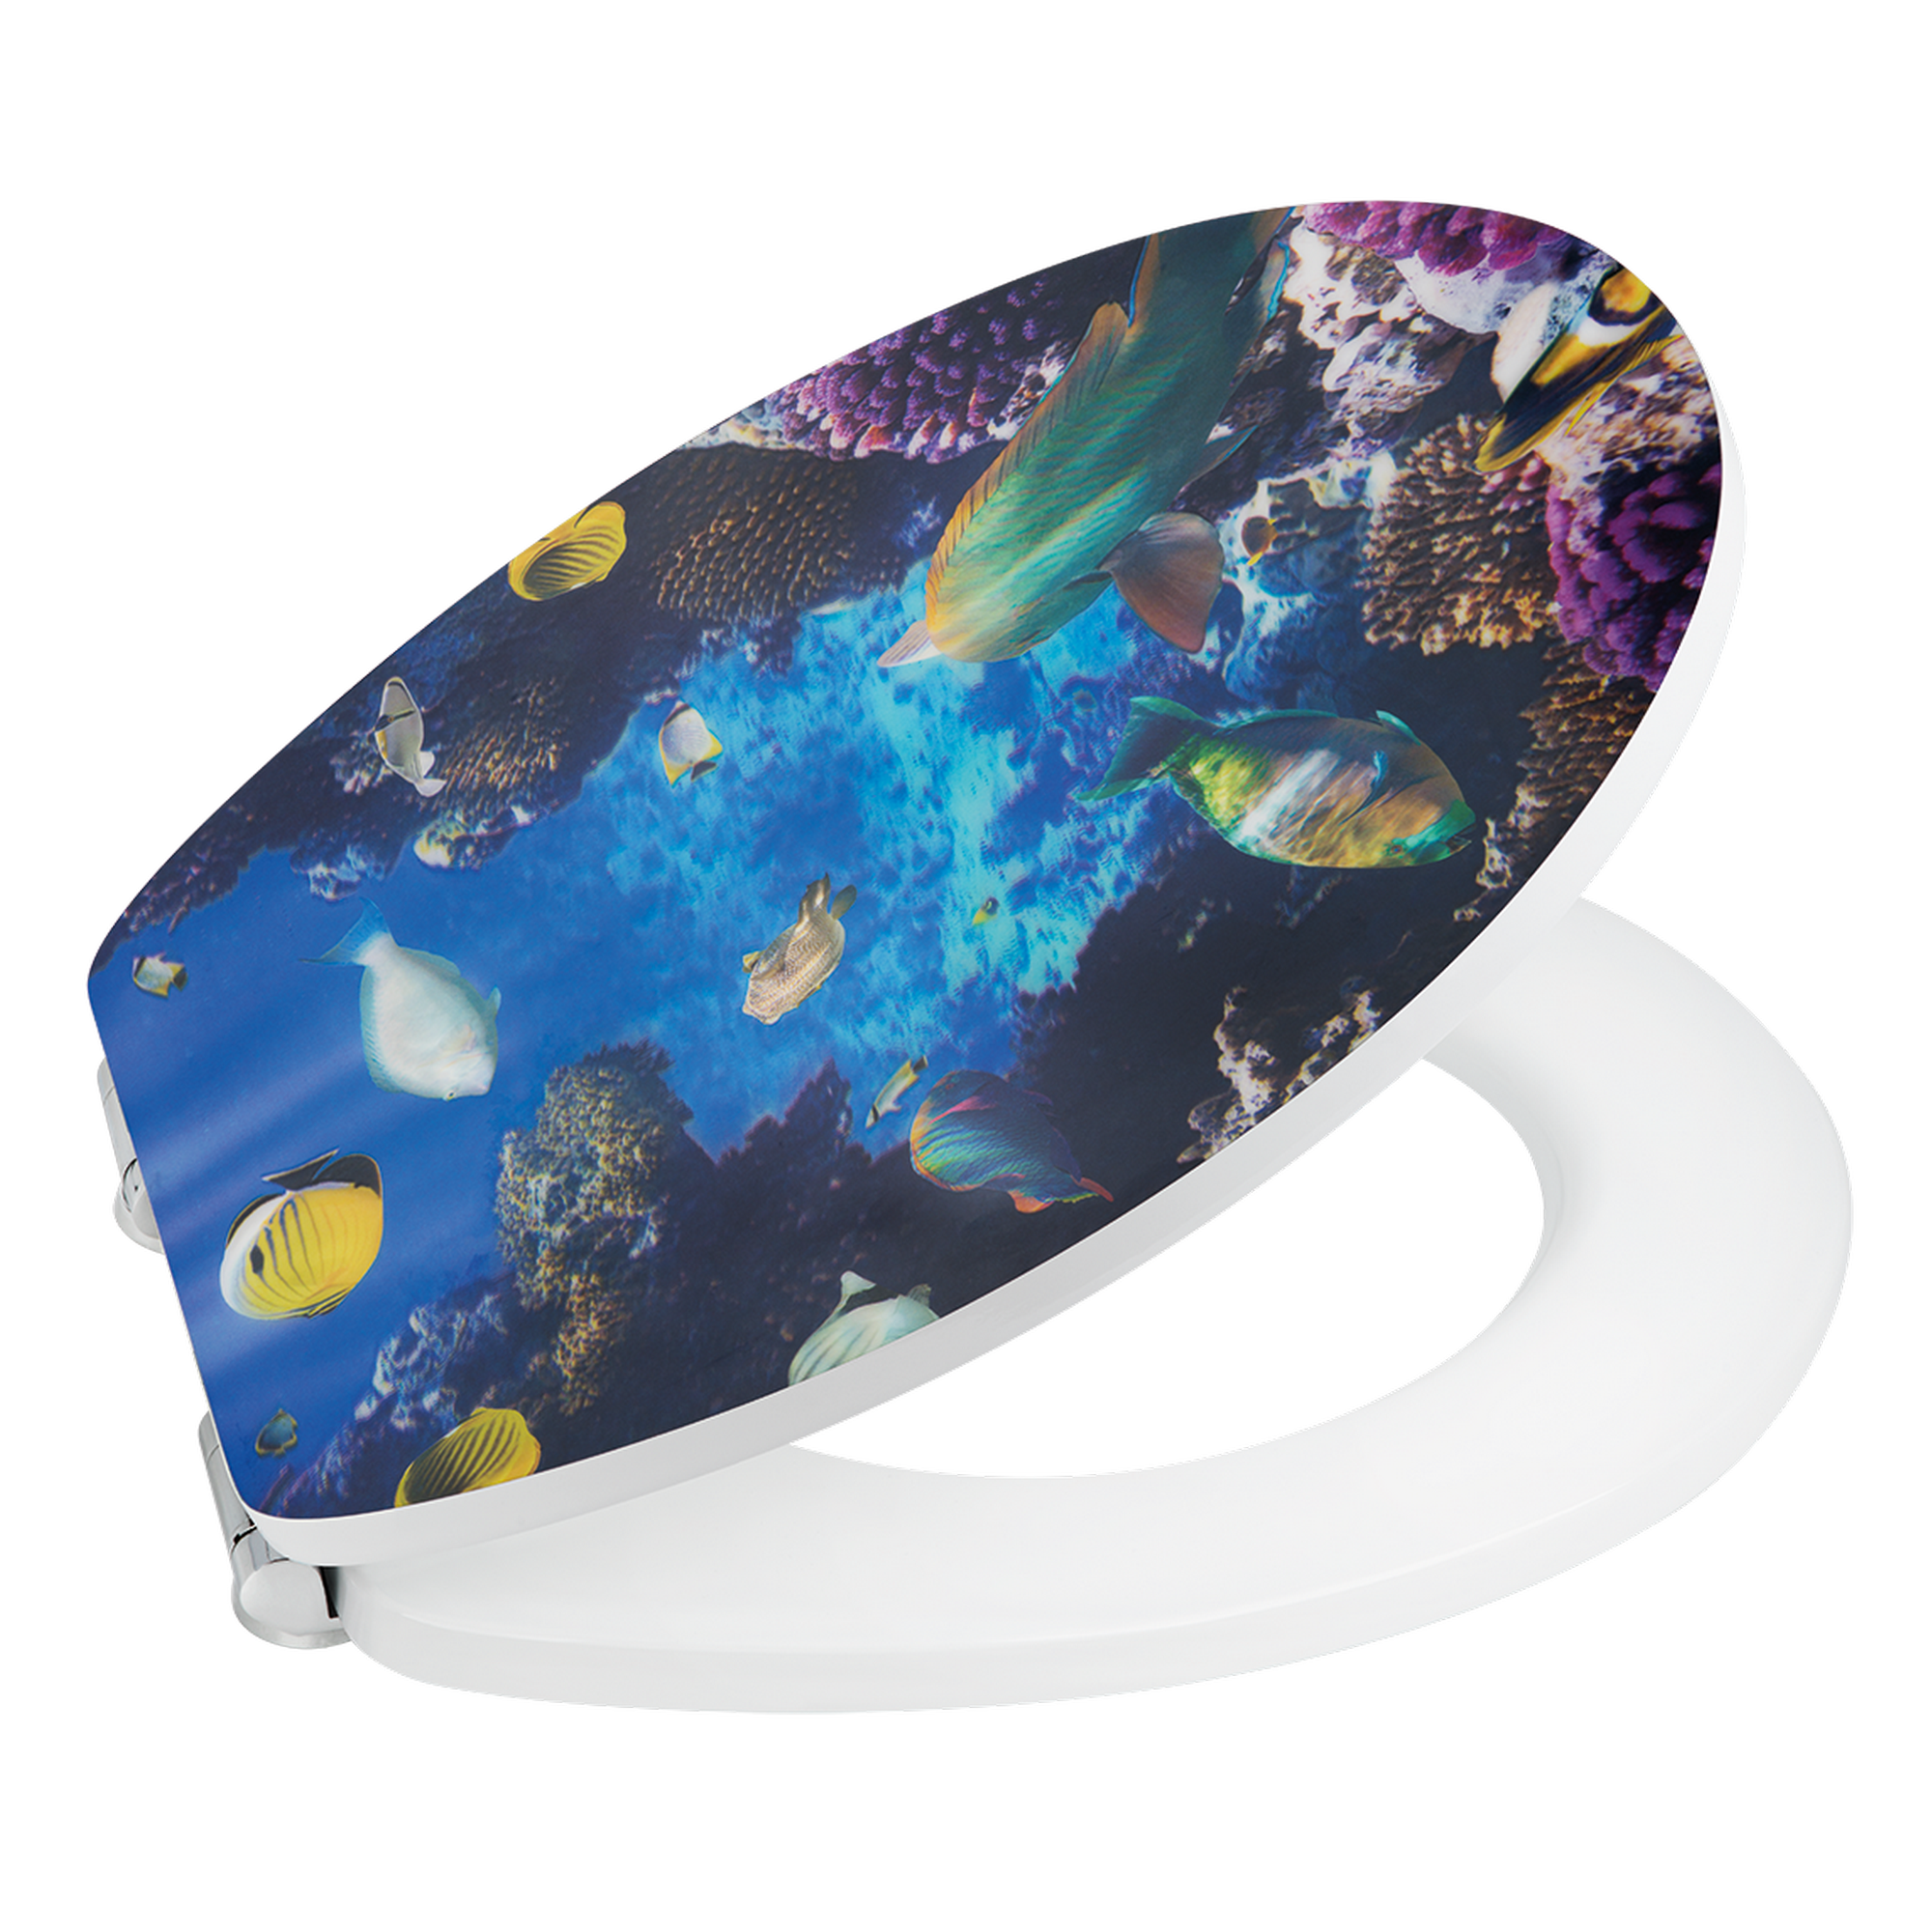 WC-Sitz 'Ozean' mit 3D-Effekt und Absenkautomatik blau 46,8 x 37,8 cm + product picture